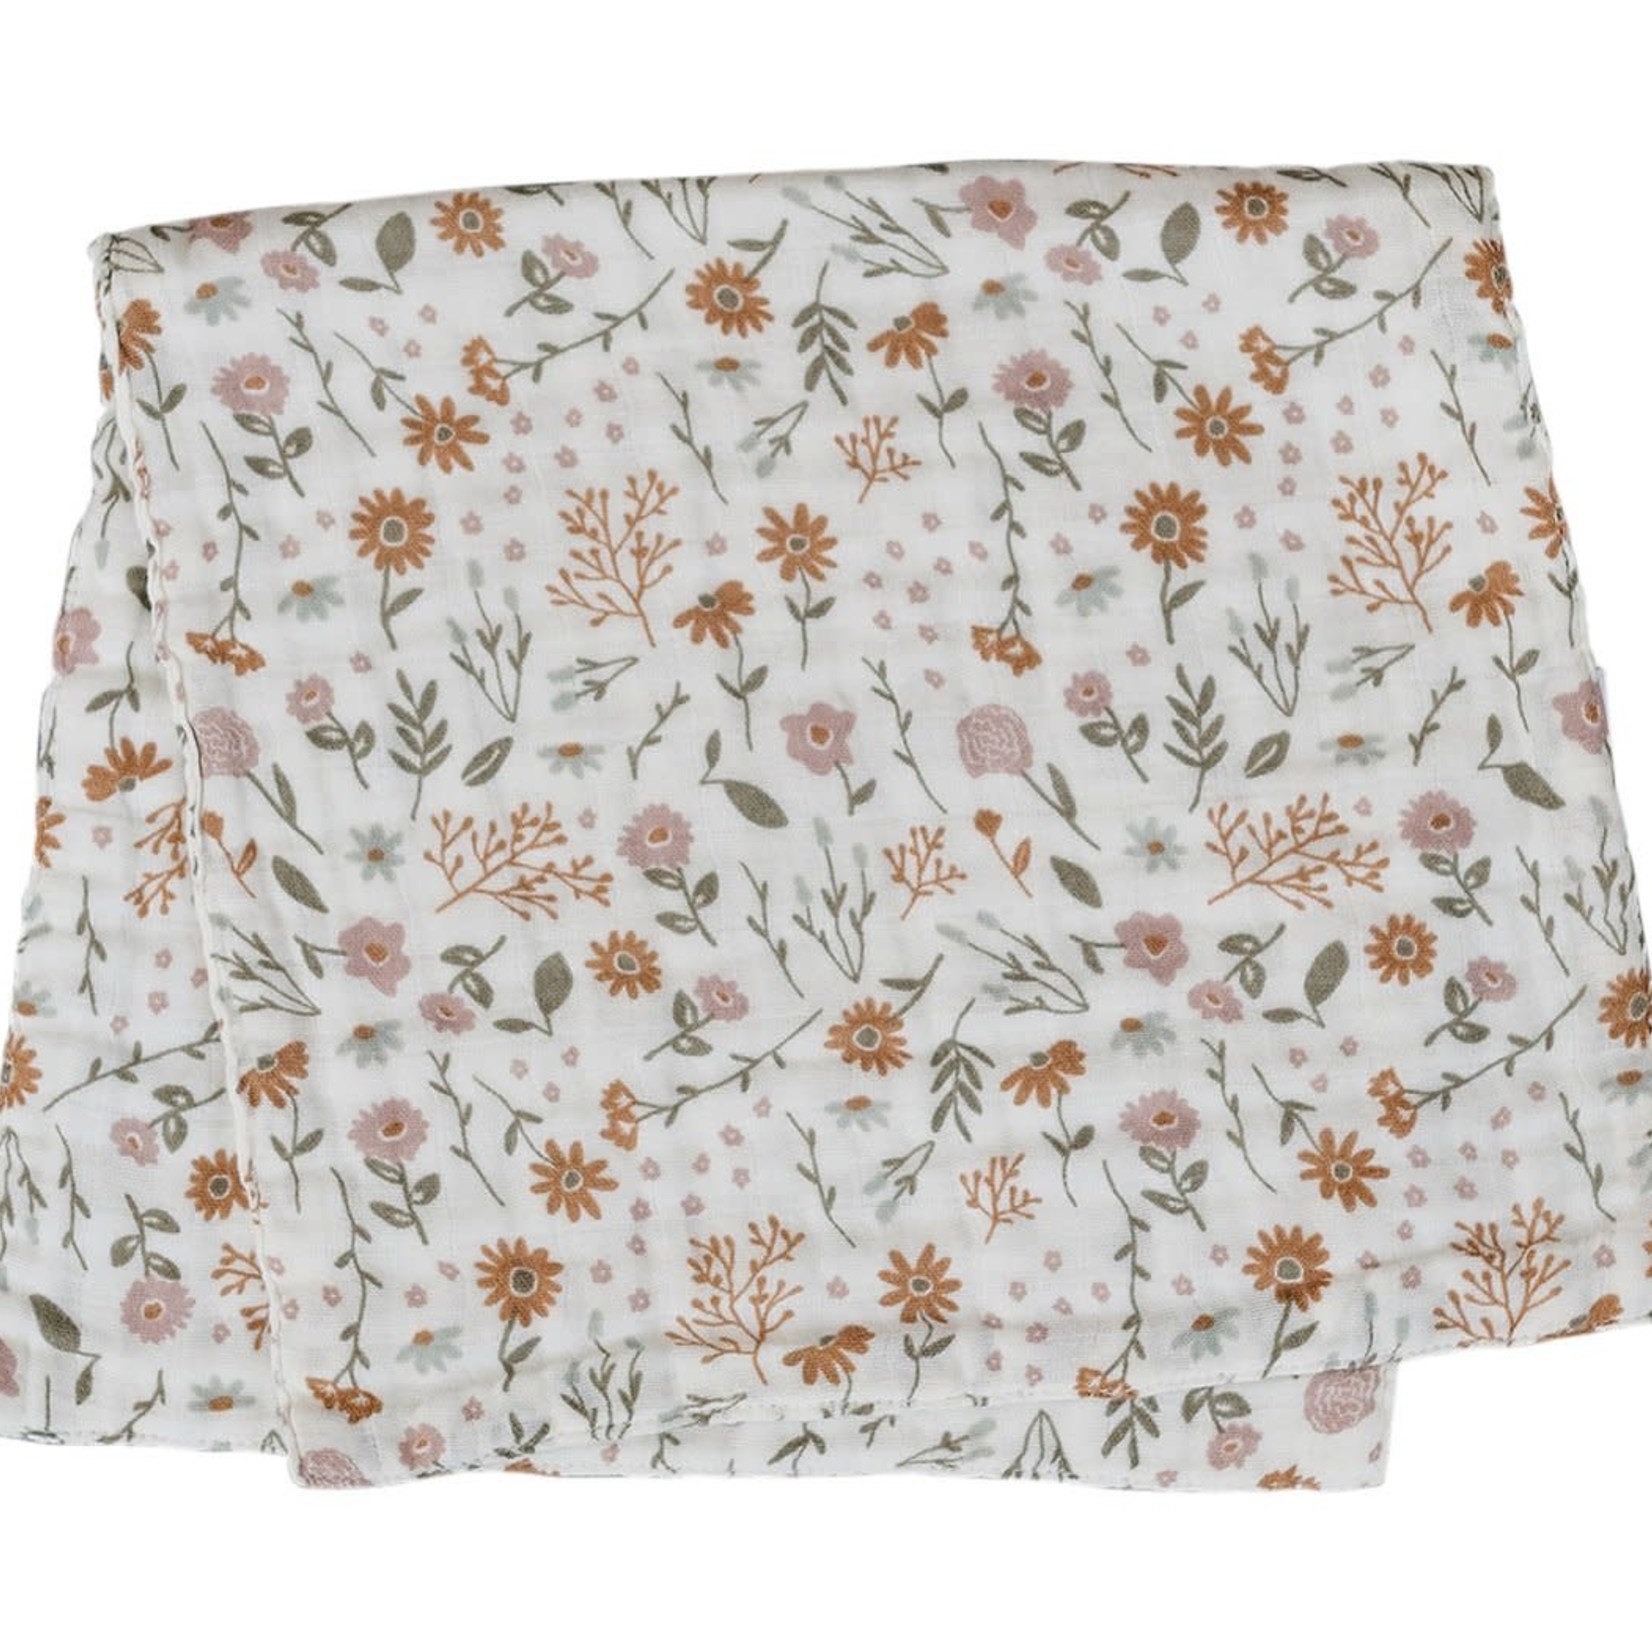 Mebie Baby Burp Cloth - Meadow Floral